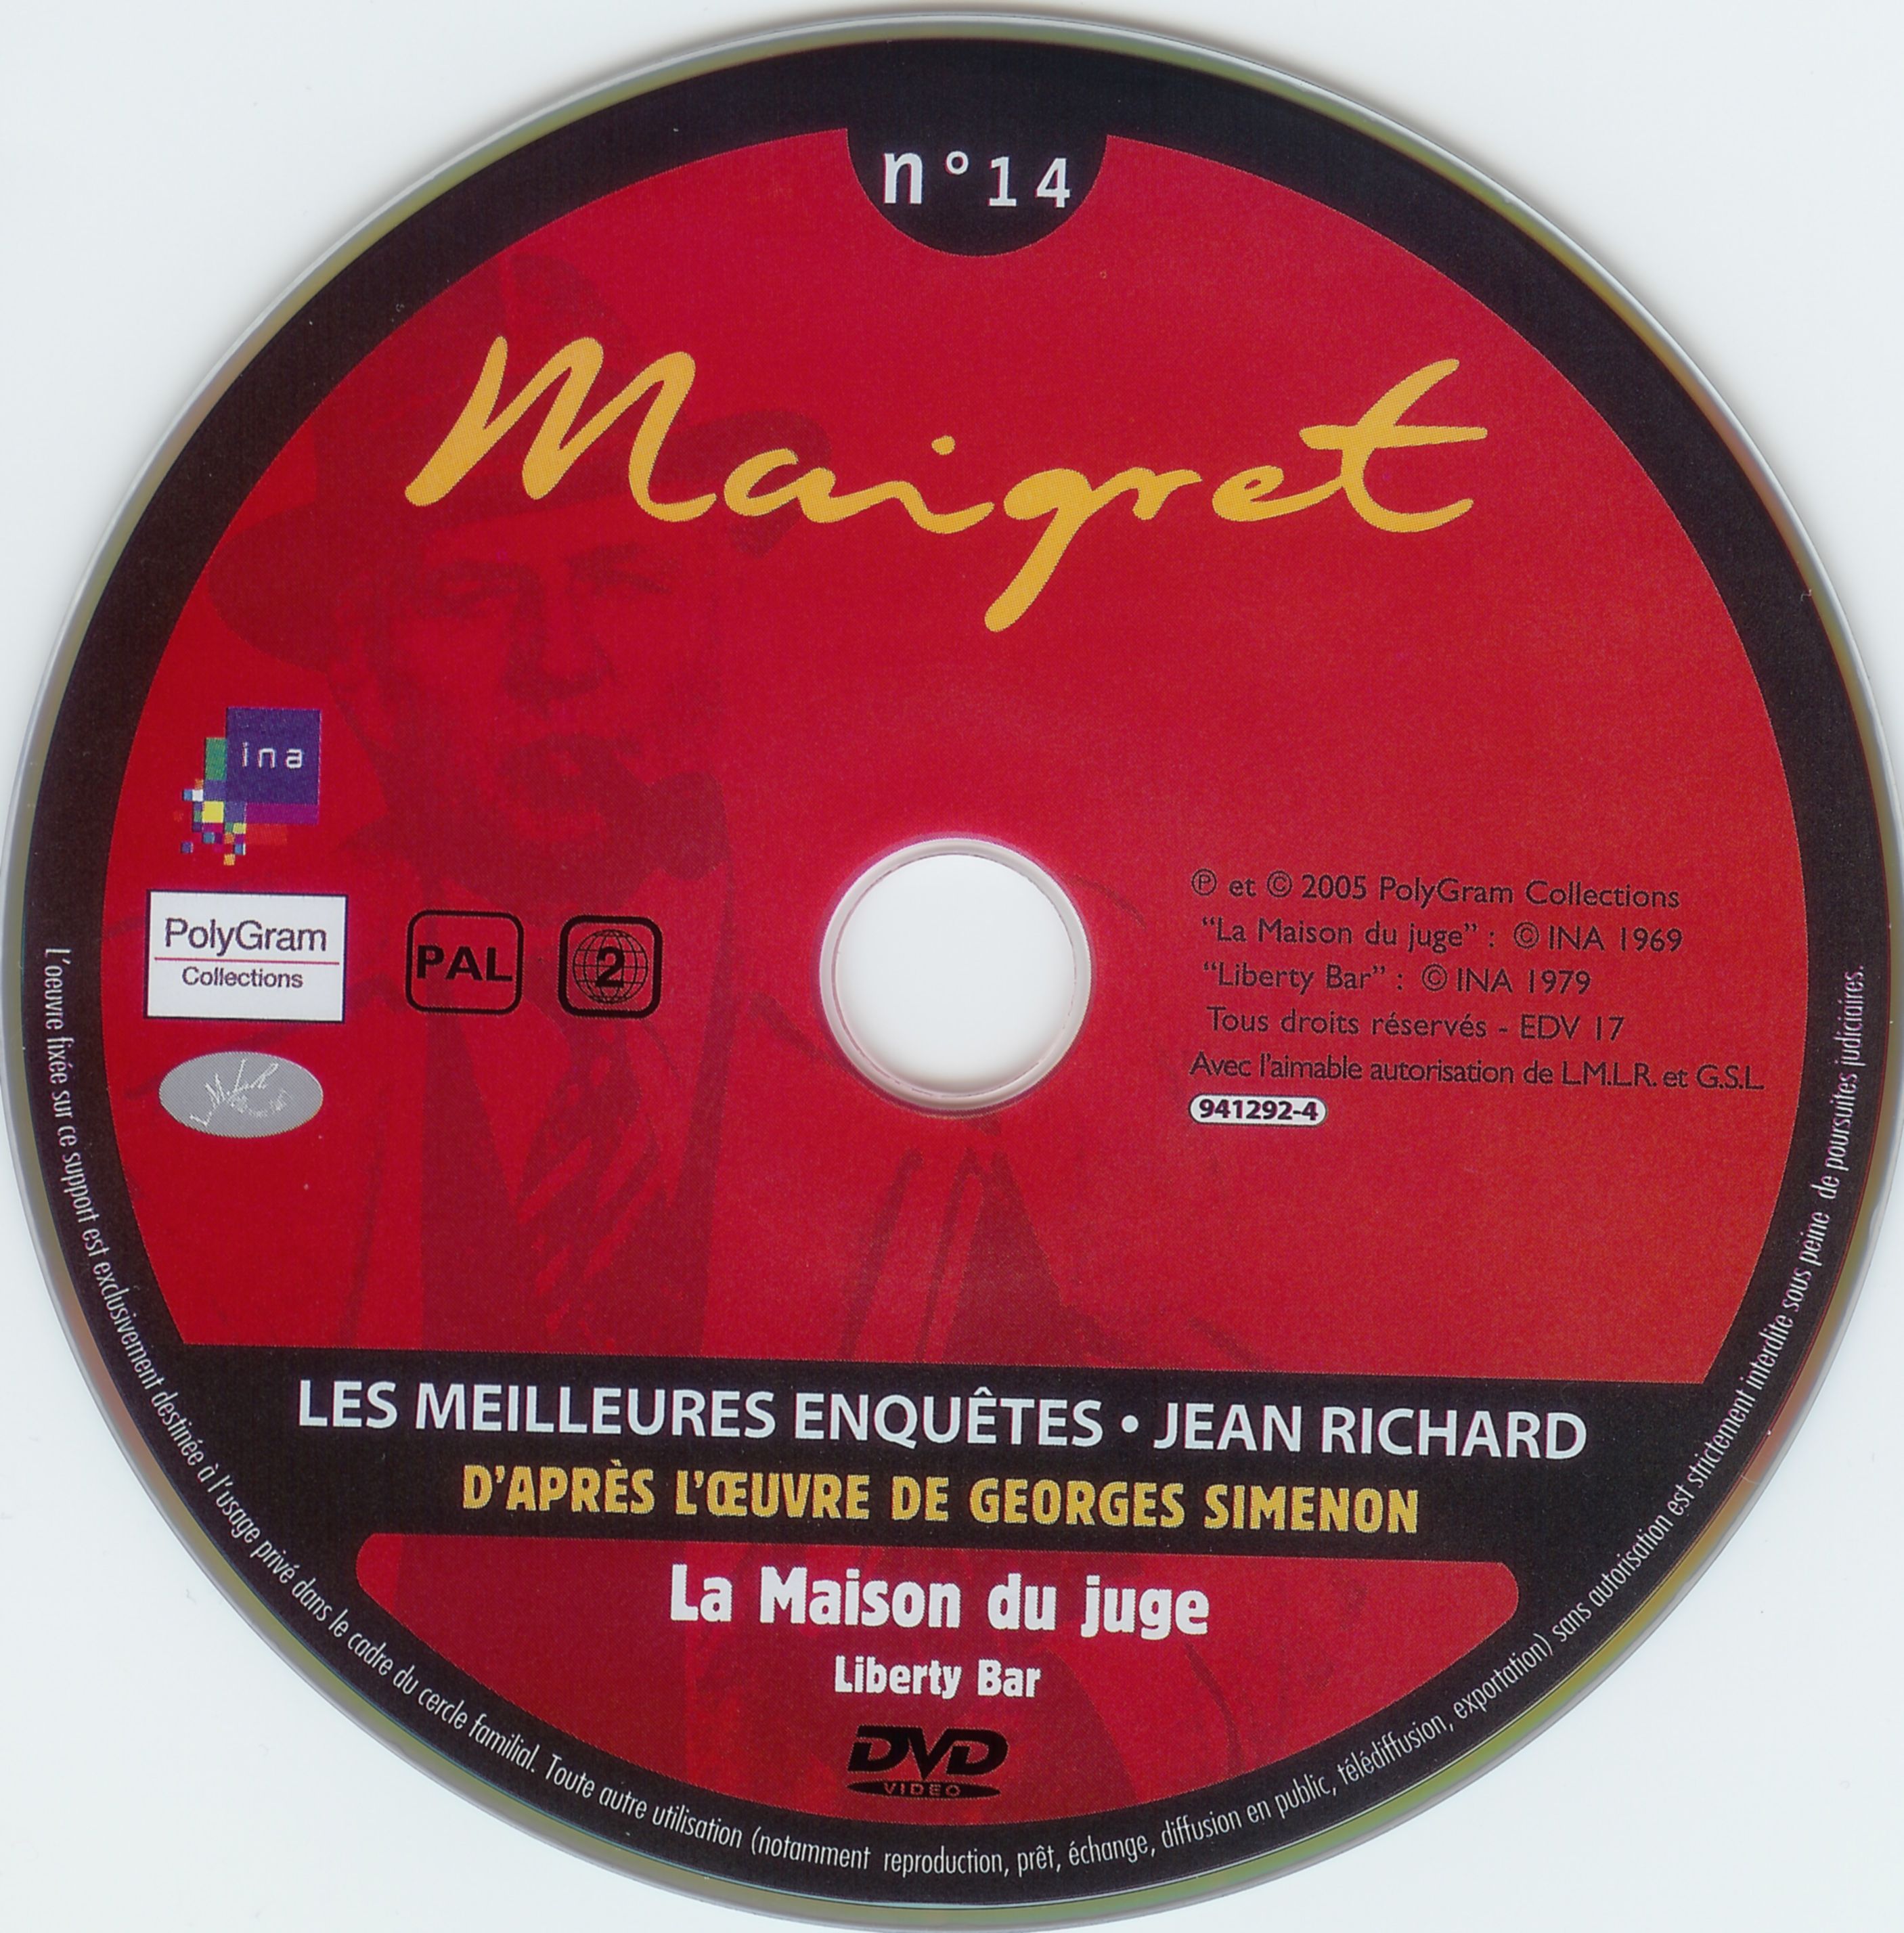 Maigret (Jean Richard) vol 14